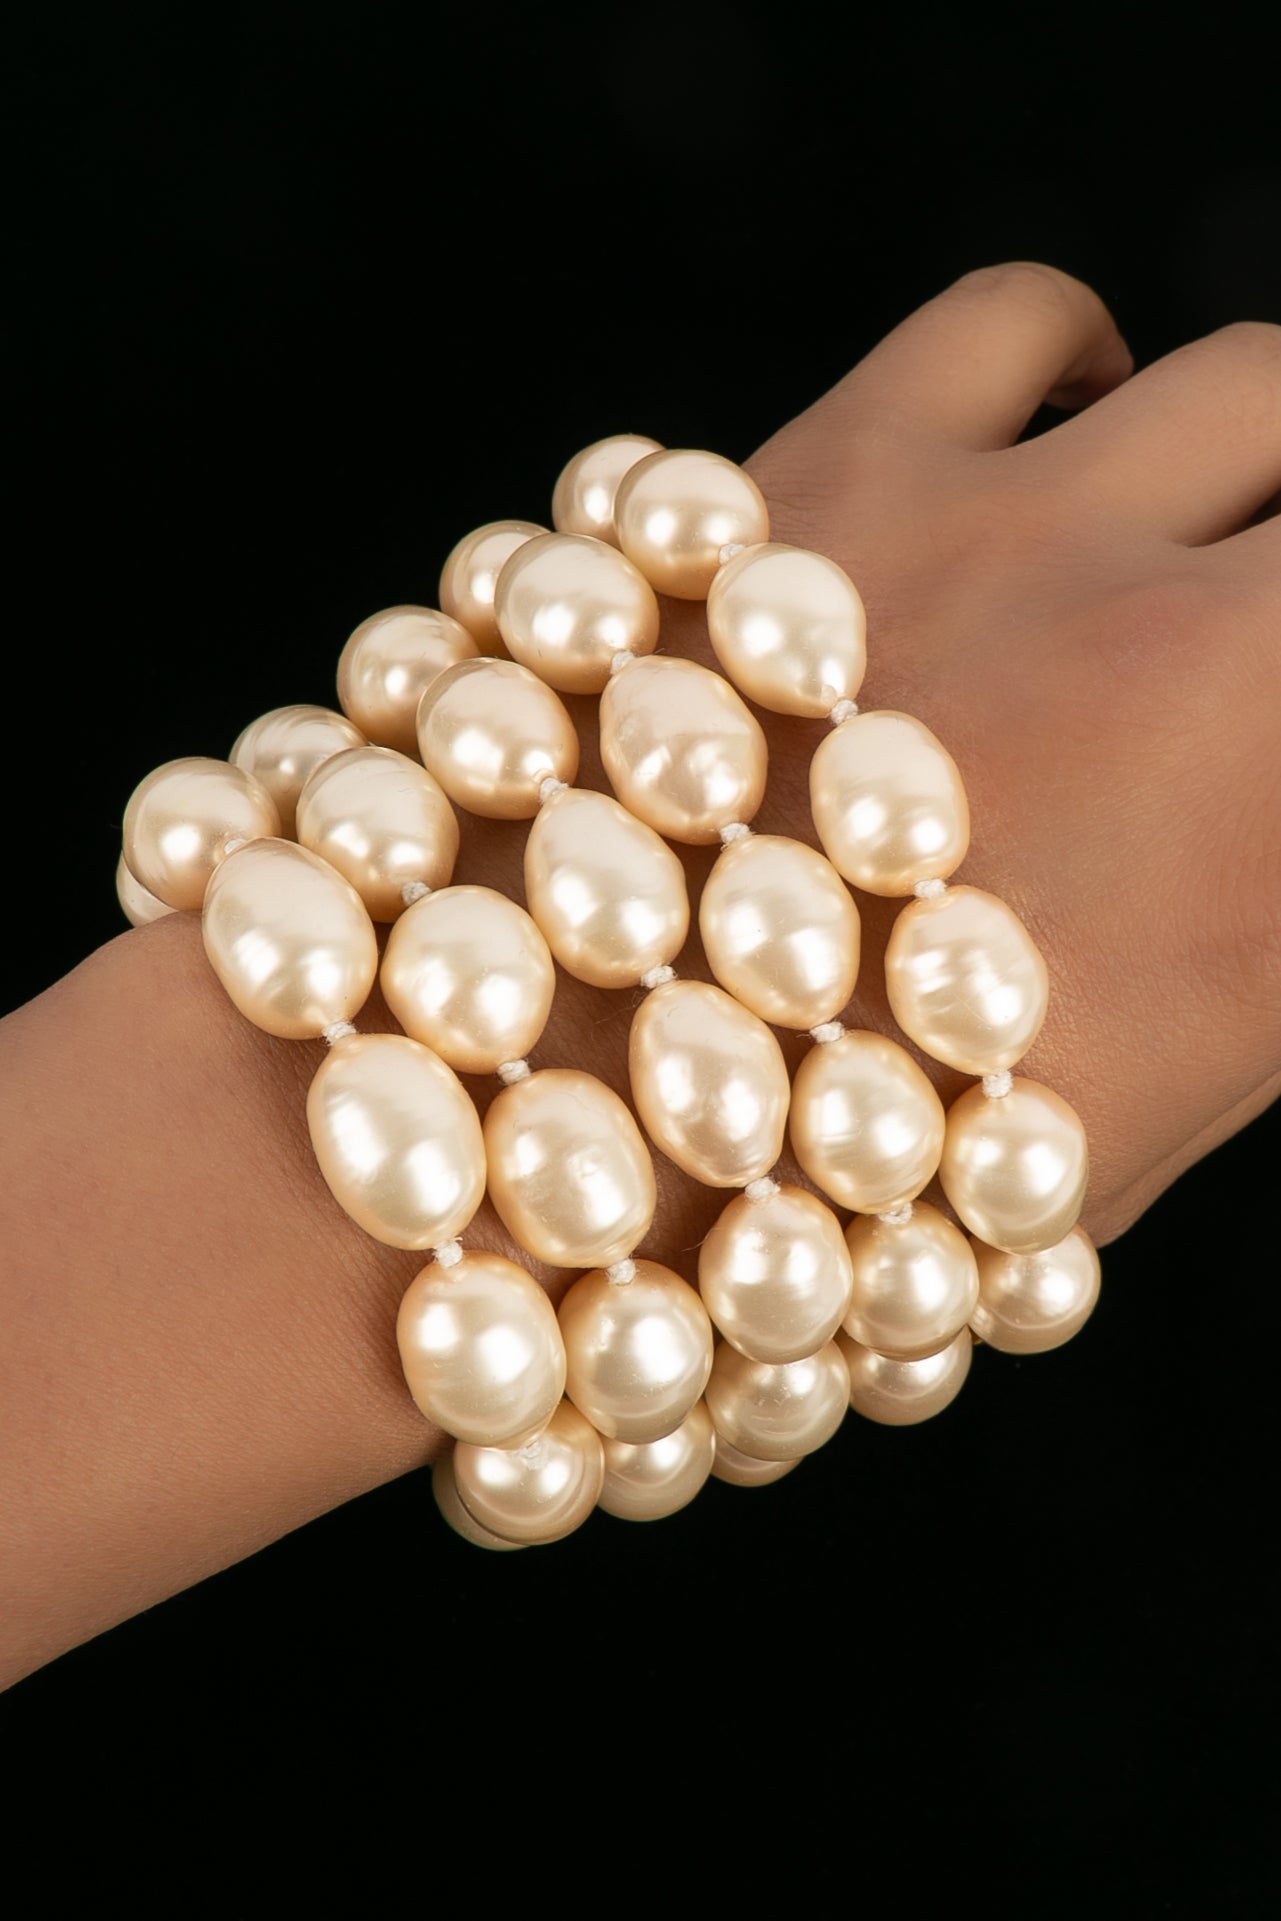 Bracelet de perles Chanel